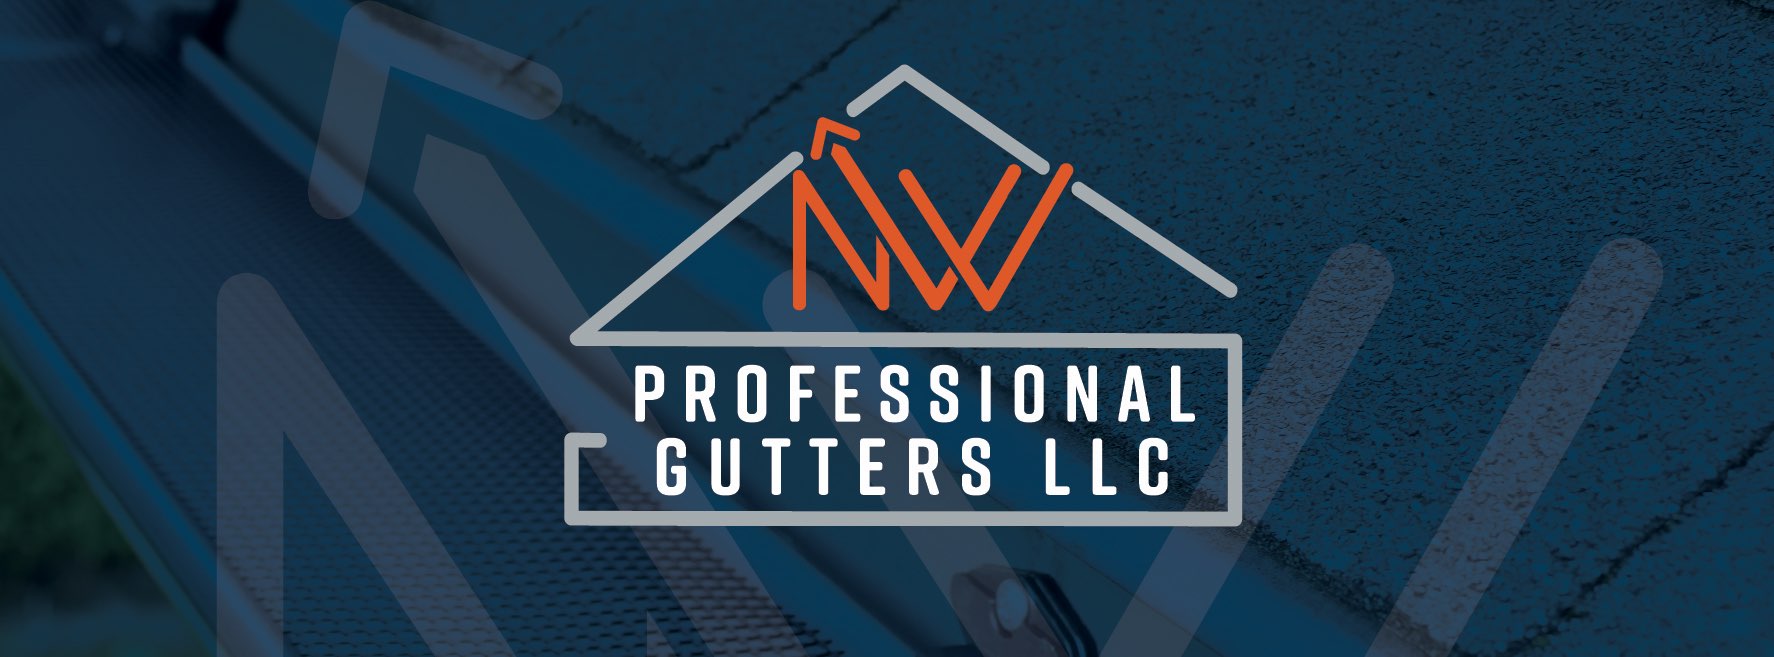 Northwest Professional Gutters, LLC Logo